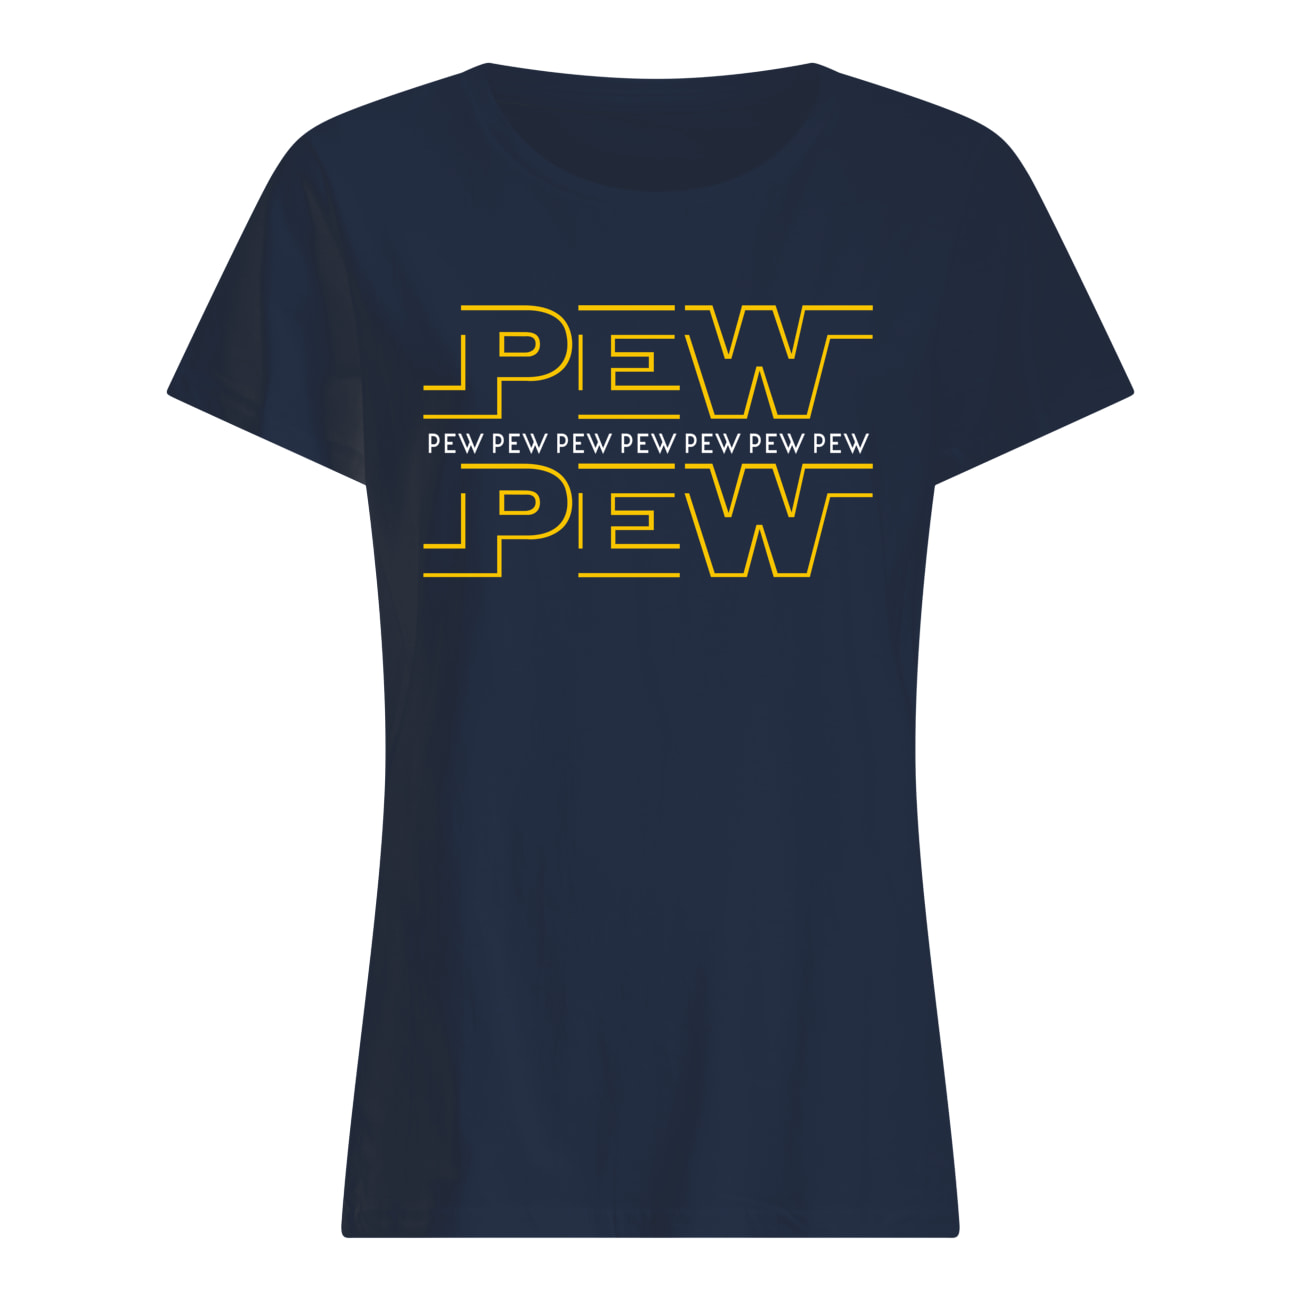 Pew pew pew star wars womens shirt